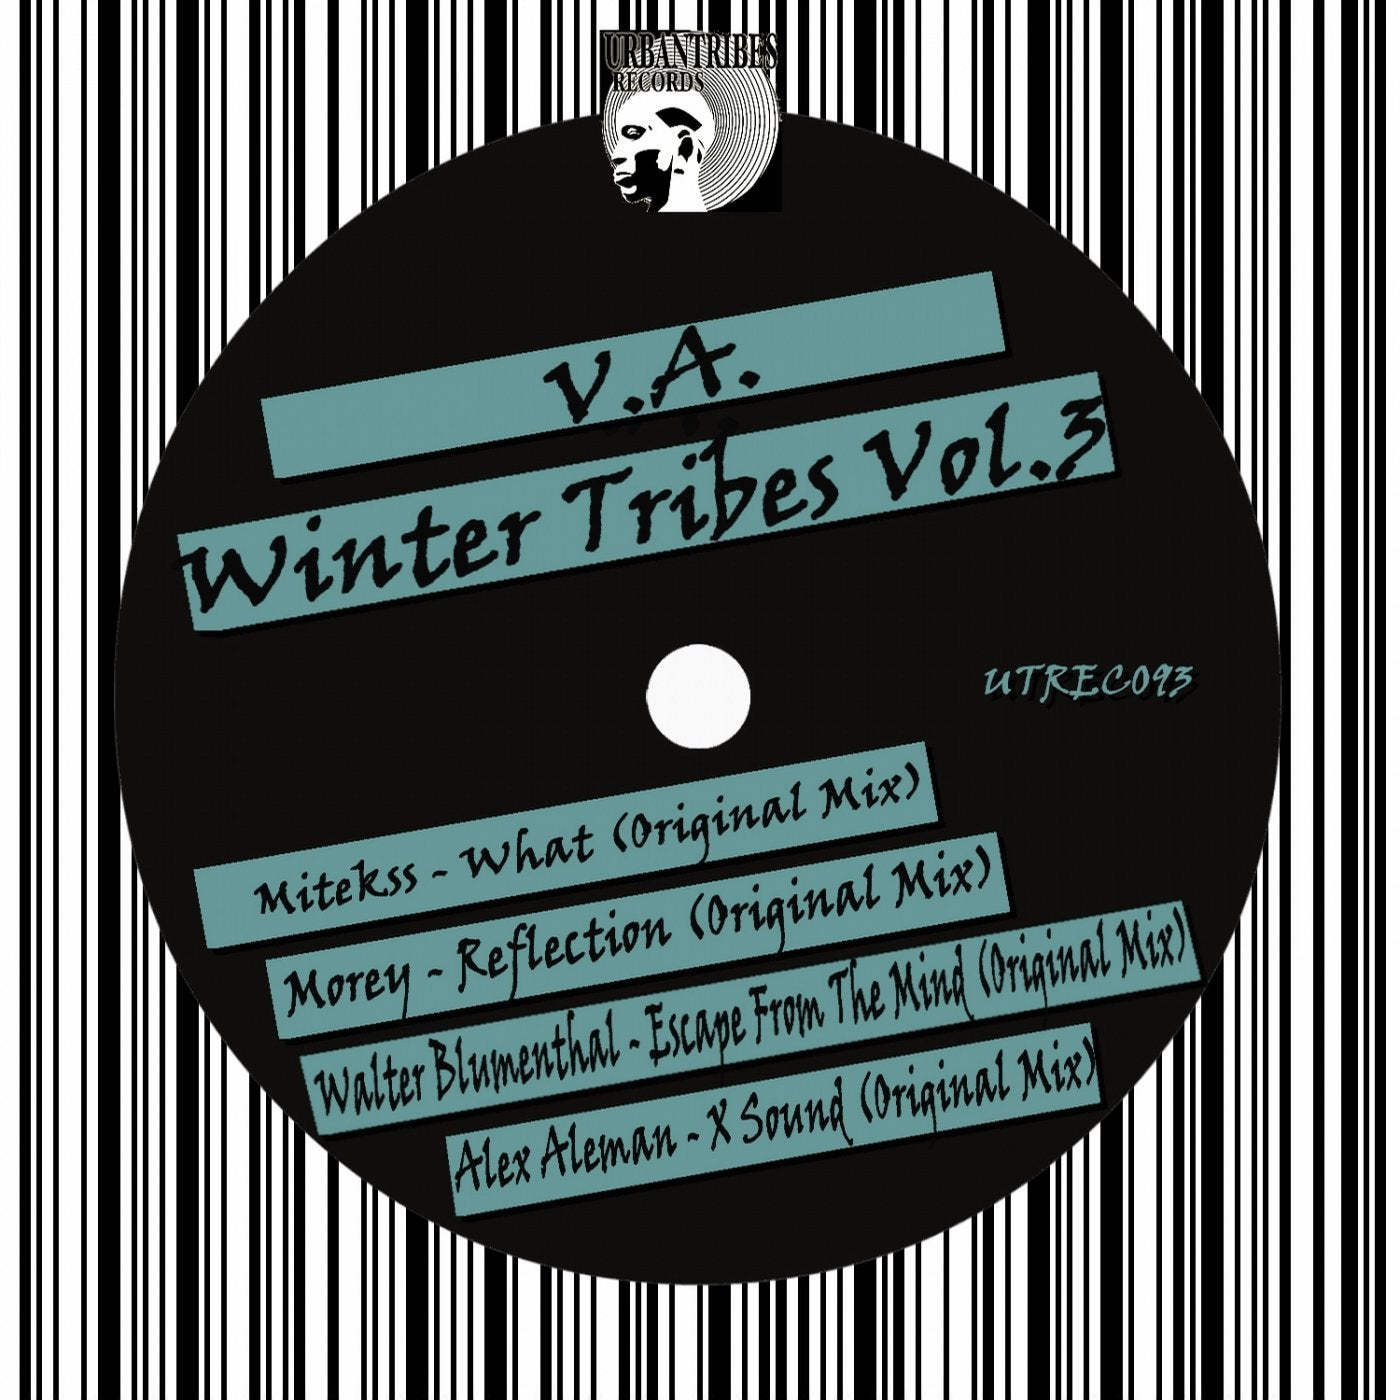 Winter Tribes Vol. 3